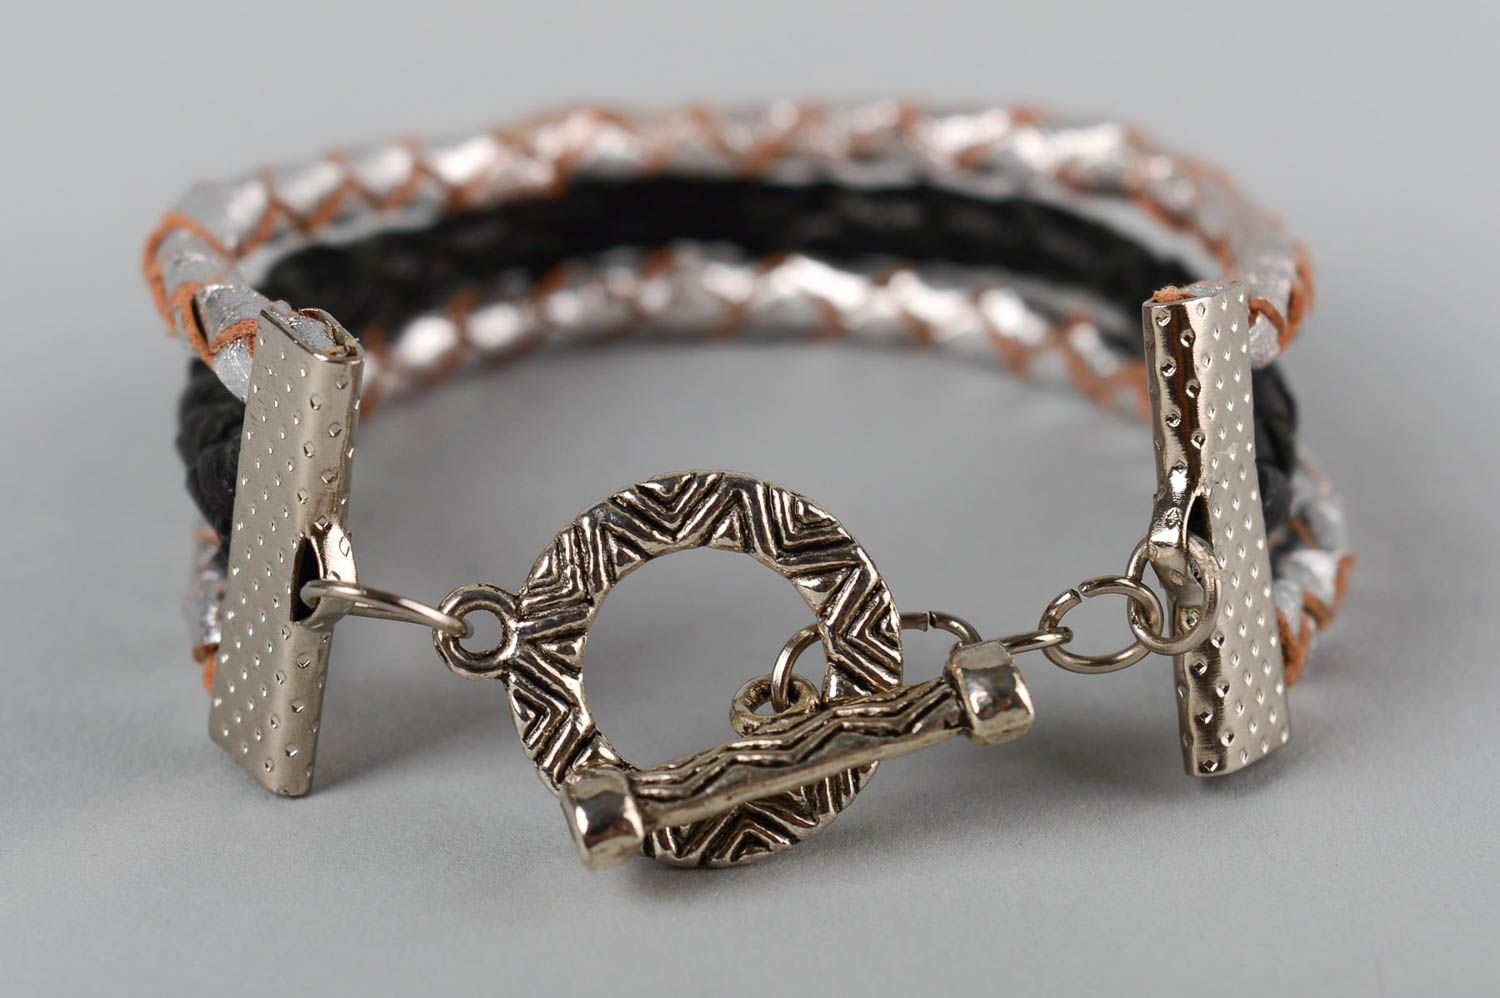 Stylish handmade leather bracelet braided wrist bracelet fashion accessories photo 3